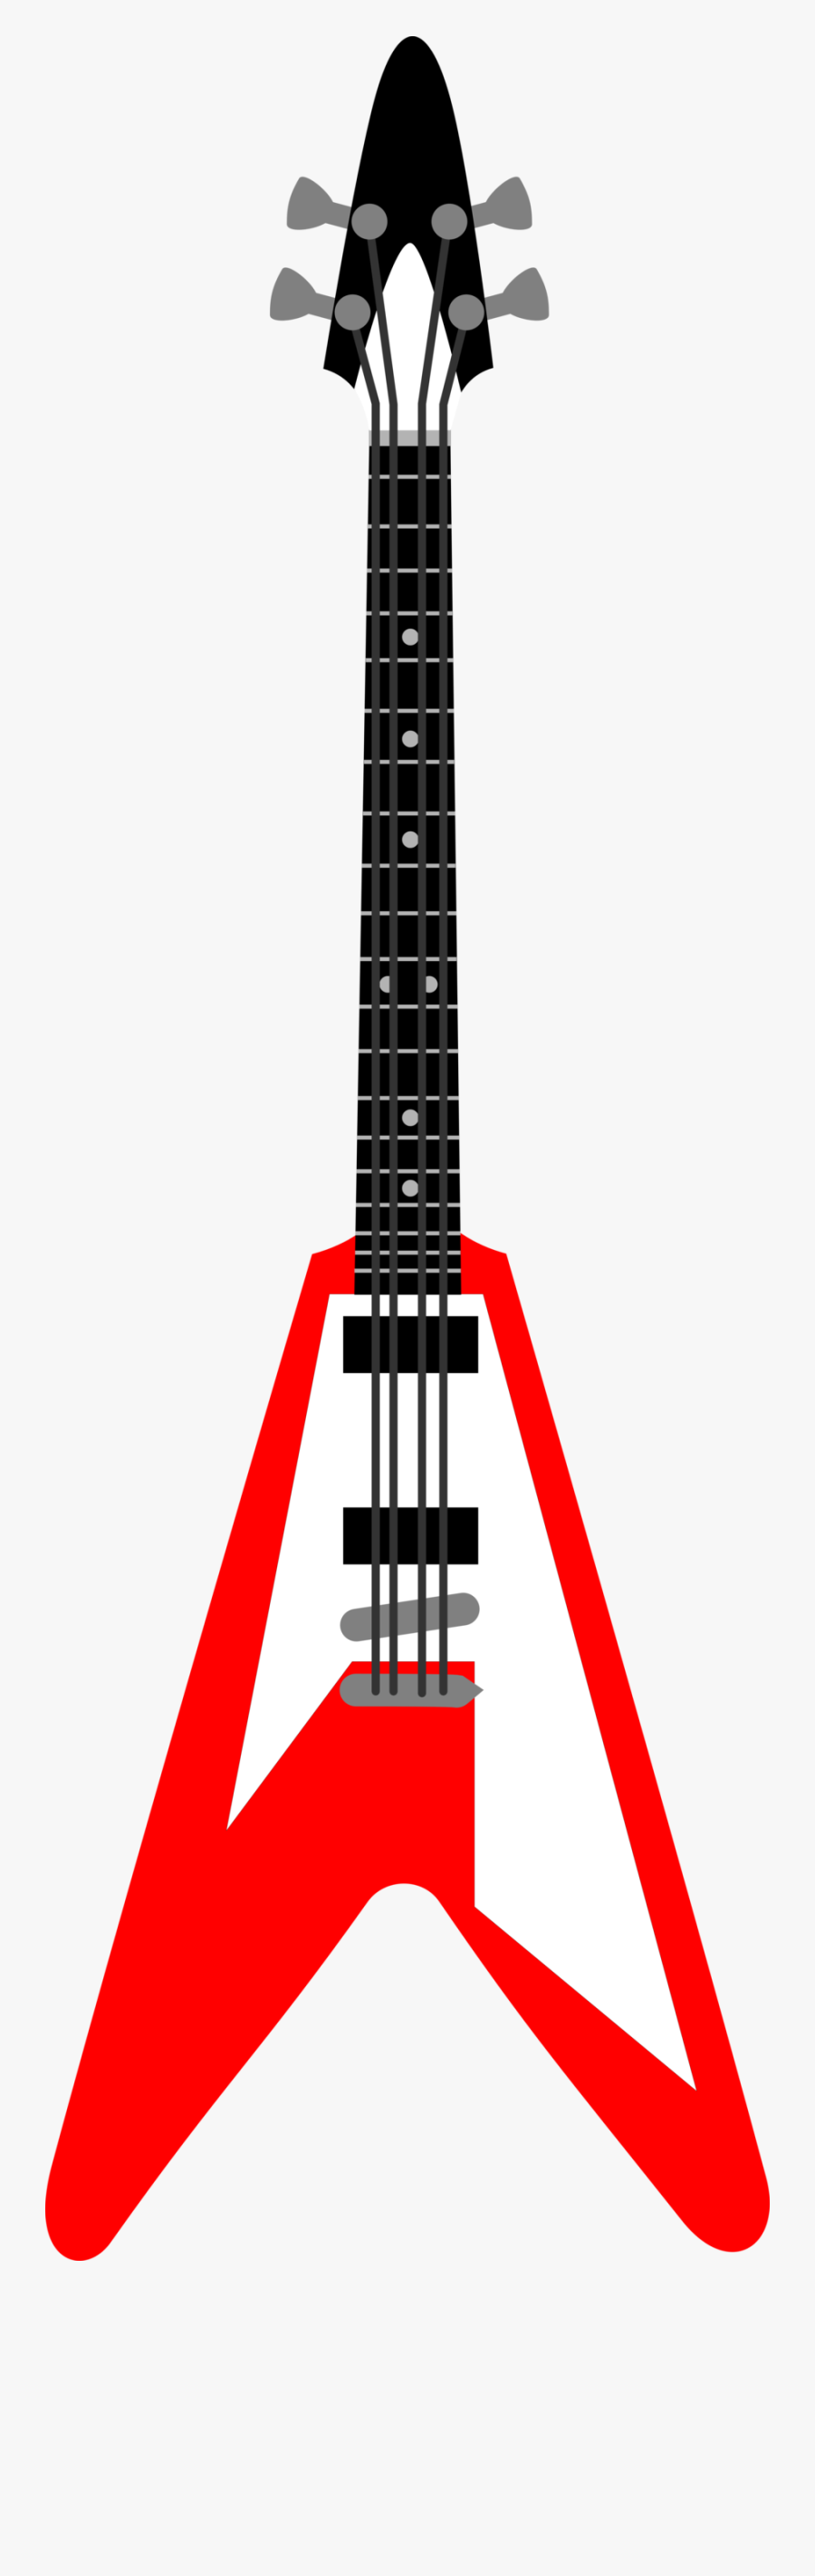 Guitar Clipart - Electric Guitar Cartoon Png, Transparent Clipart